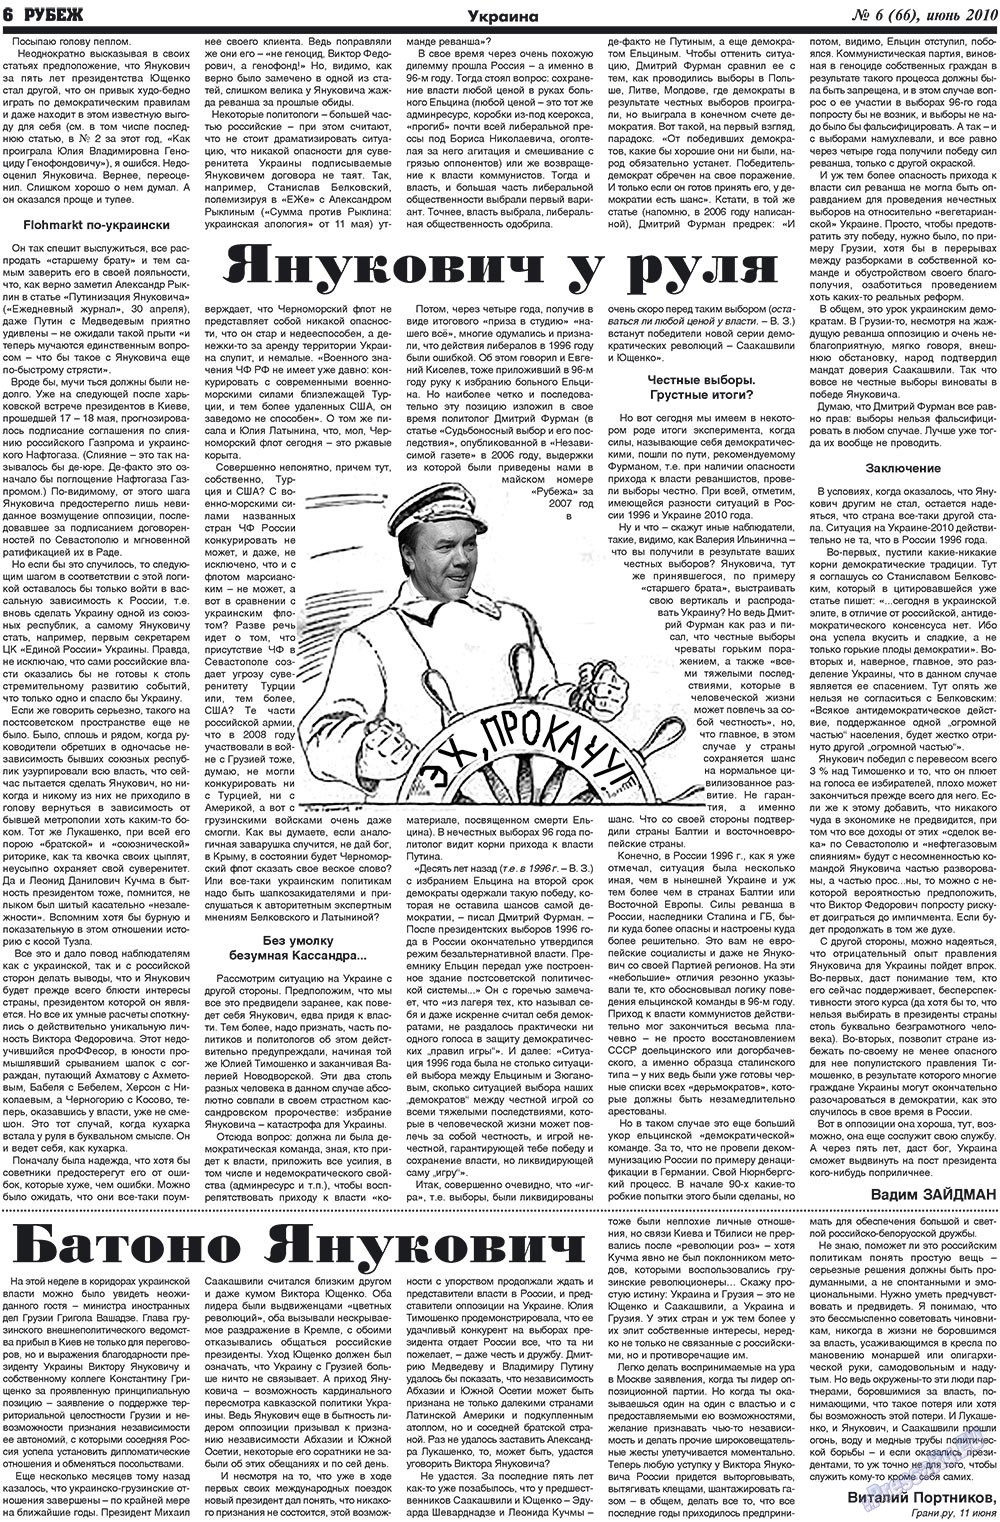 Рубеж, газета. 2010 №6 стр.6